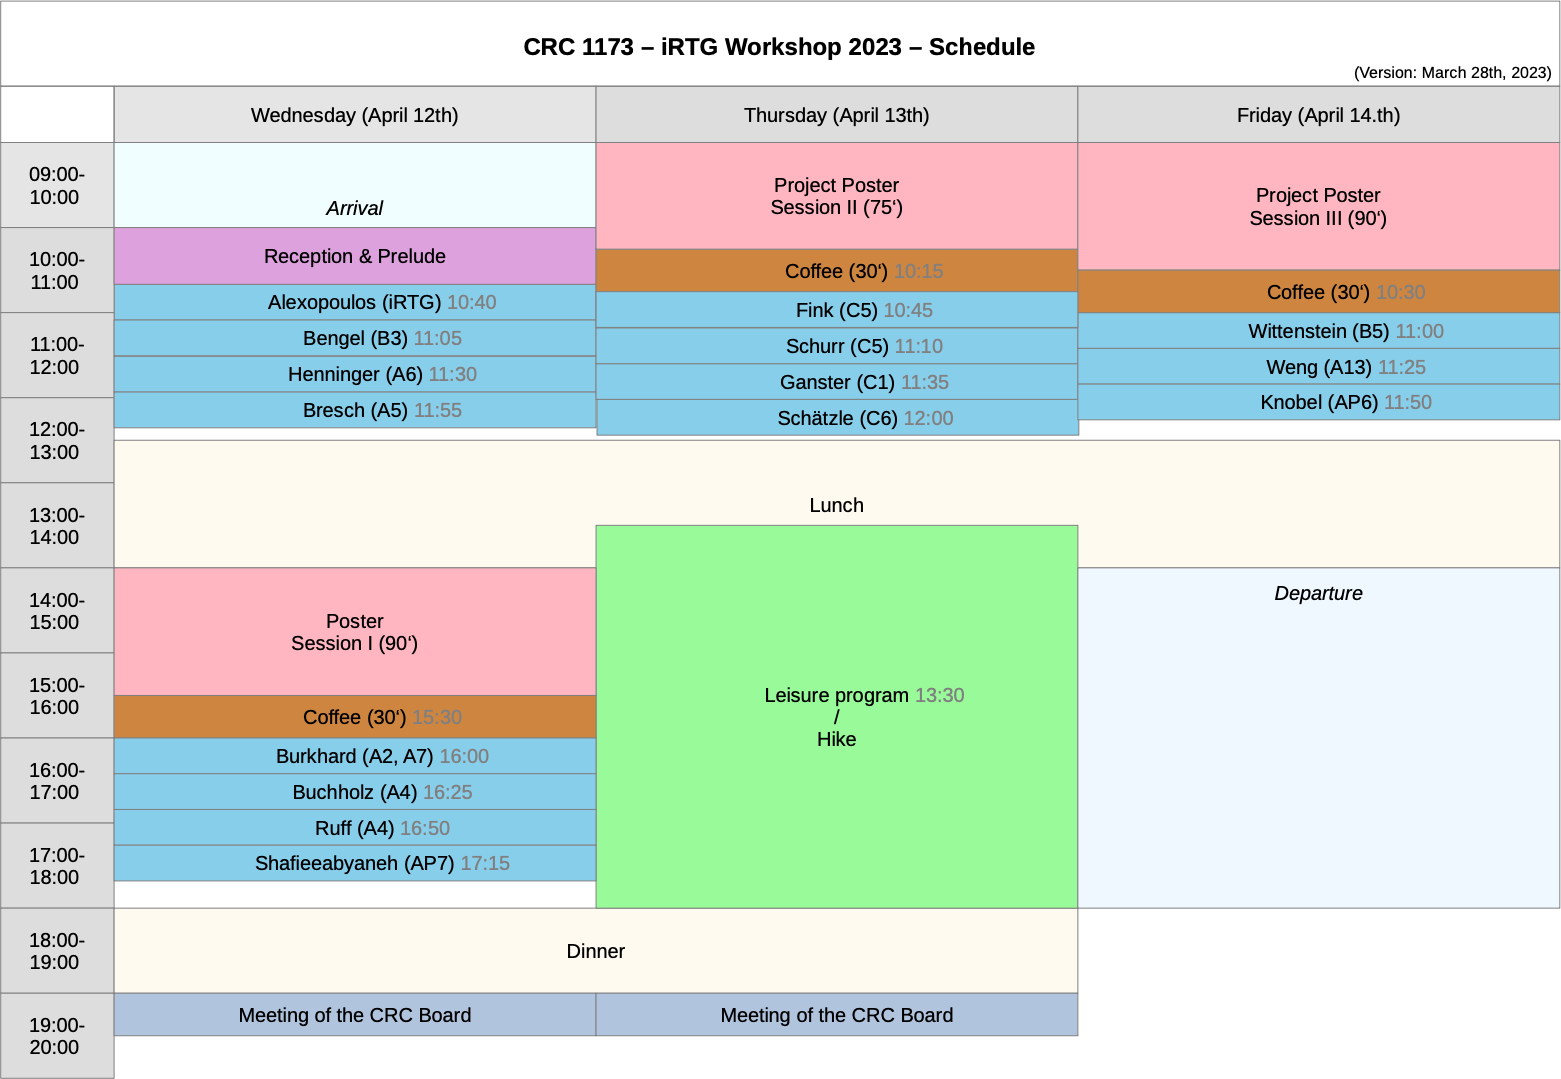 Schedule of this iRTG workshop